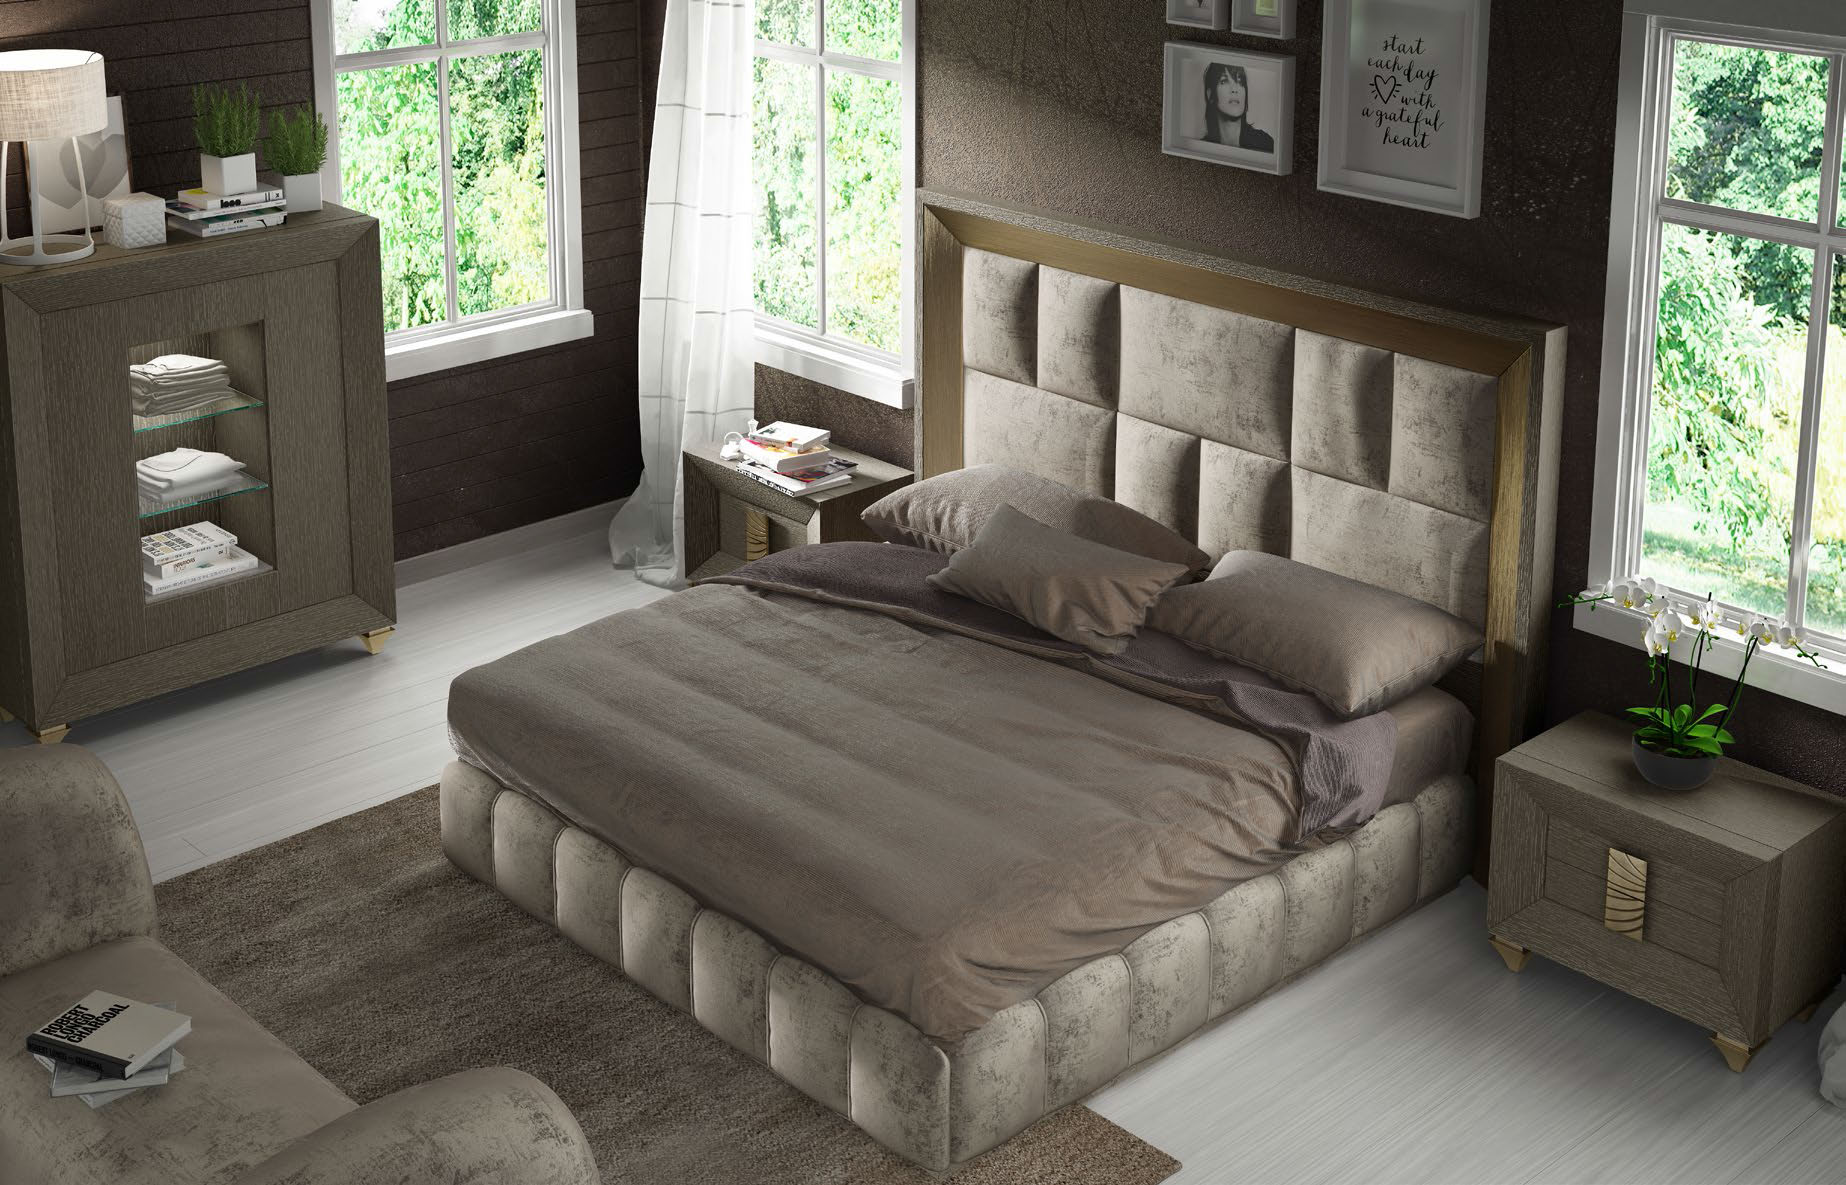 Brands Franco Furniture Bedrooms vol1, Spain DOR 111